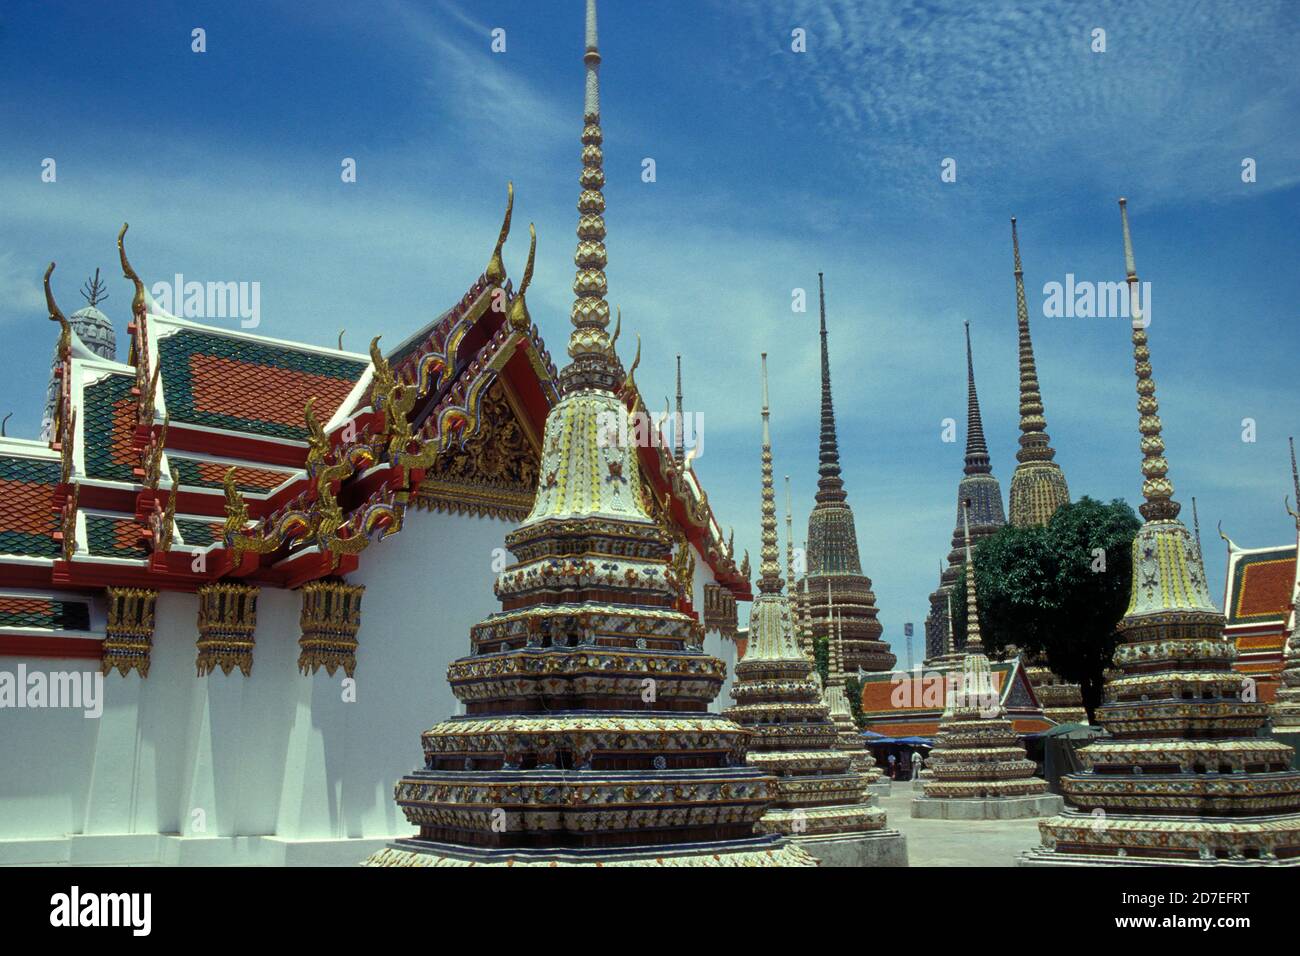 Le Wat Pho dans ko ratanakosin dans la ville de Bangkok en Thaïlande à Southeastasia. Thaïlande, Bangkok, avril 2001 Banque D'Images